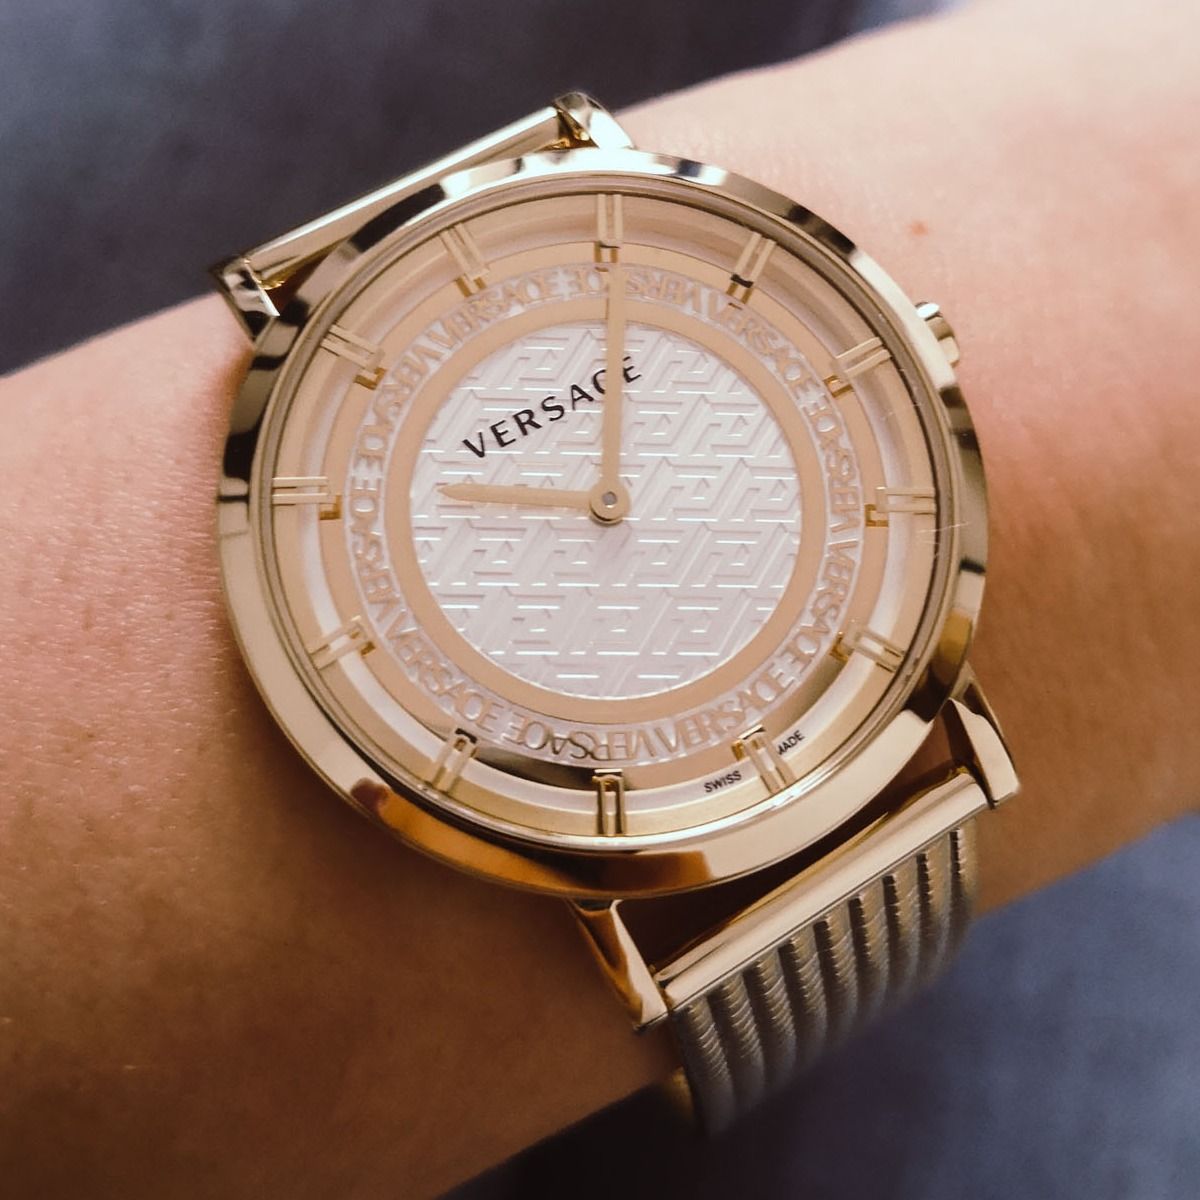 Versace New Generation watch